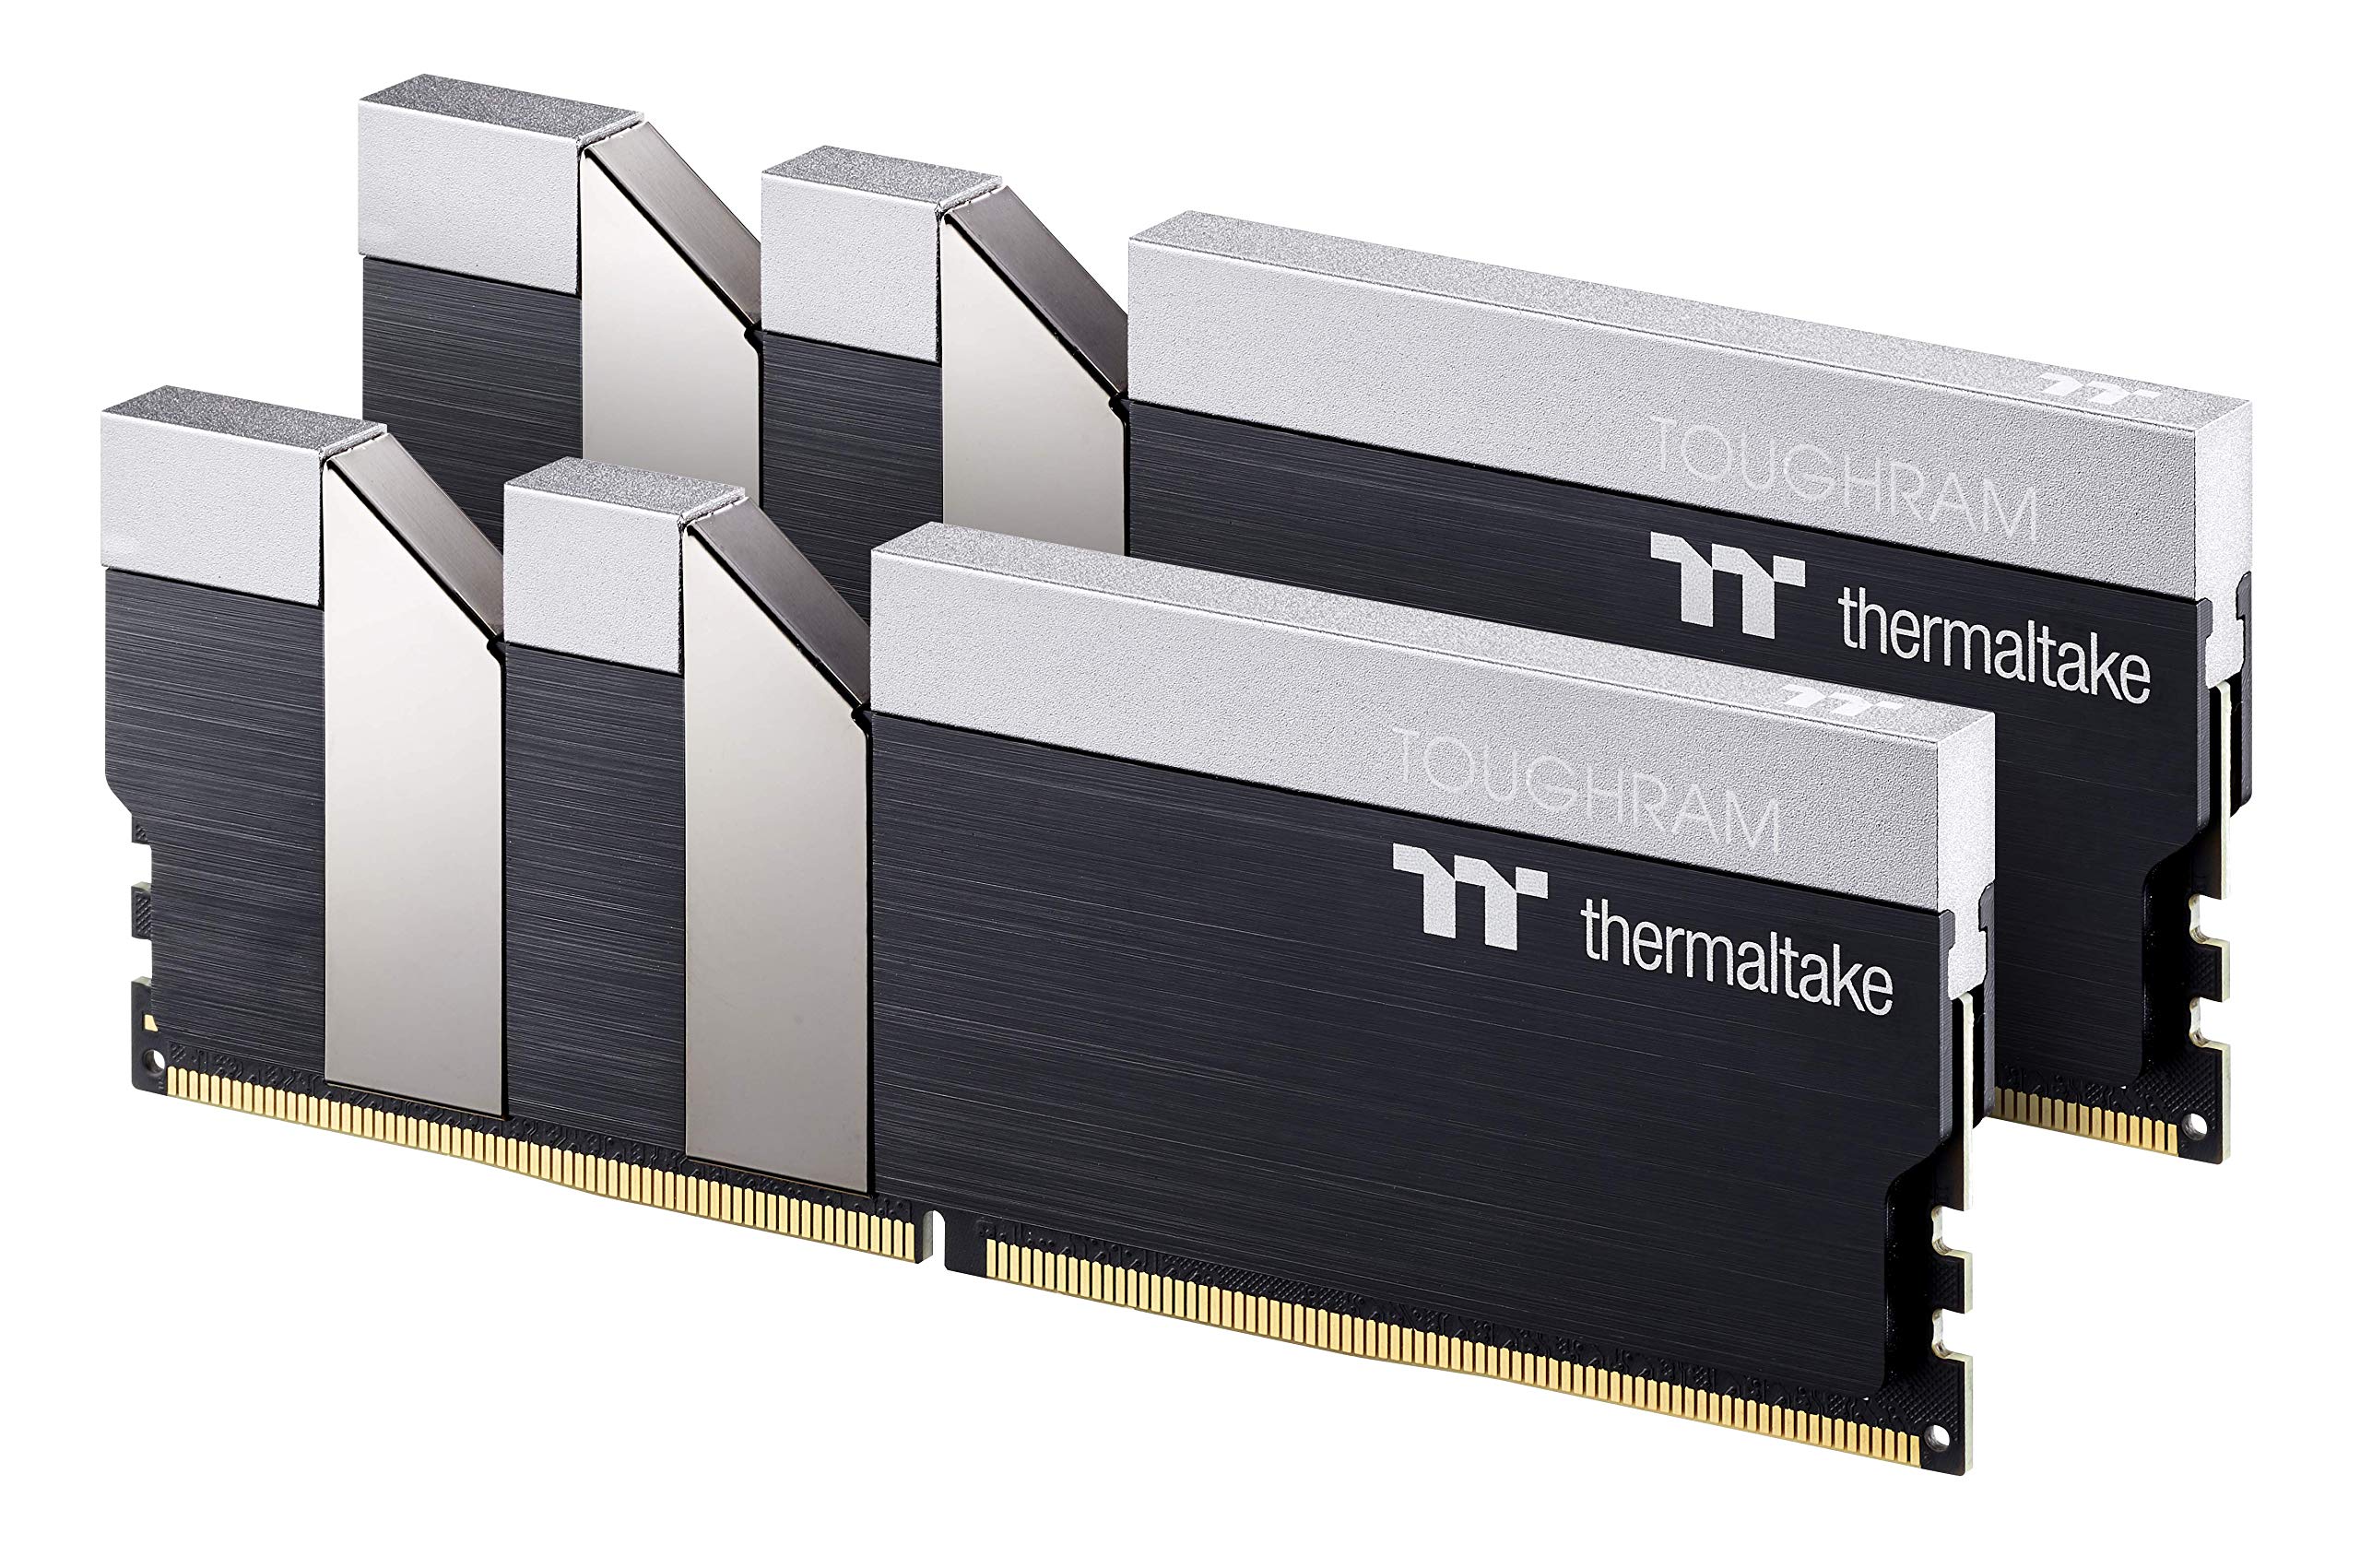 Thermaltake TOUGHRAM ブラック DDR4 4400MHz C19 16GB 8GB x 2 メモリ Intel XMP 2.0 リアルタイムパフォーマ